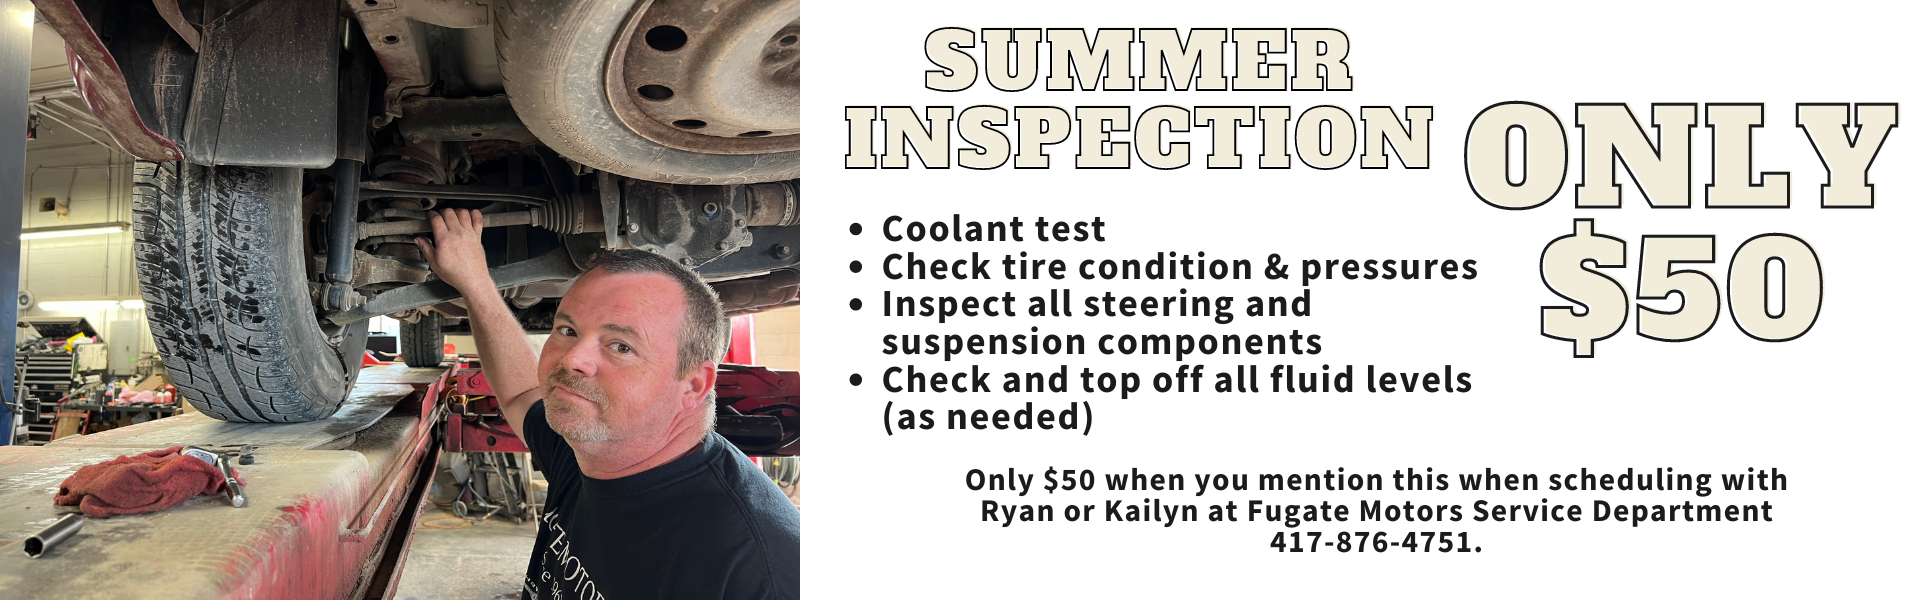 Summer Inspection